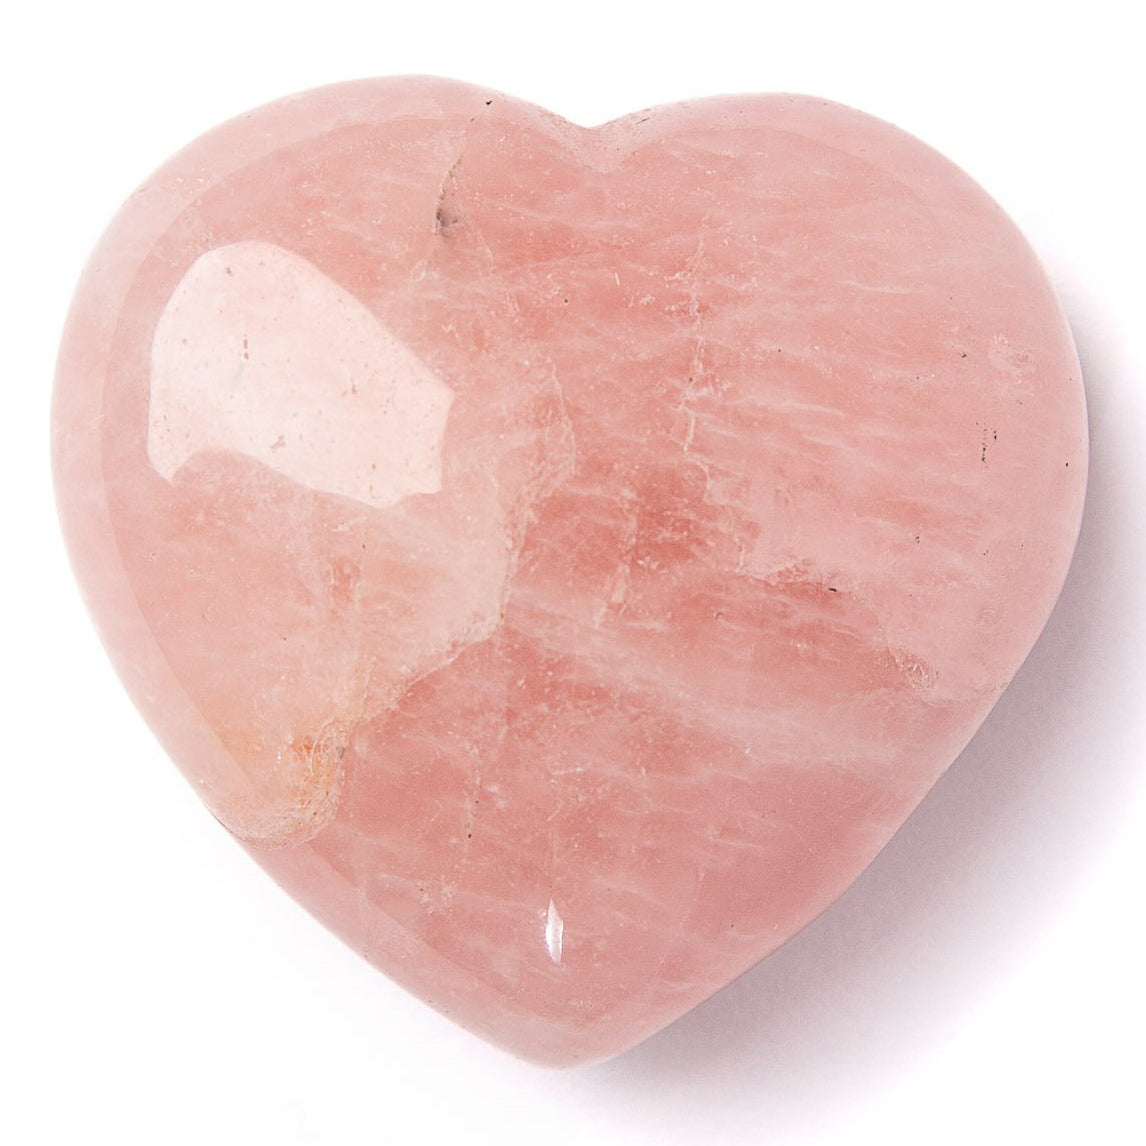 rose quartz love – a. favorite design